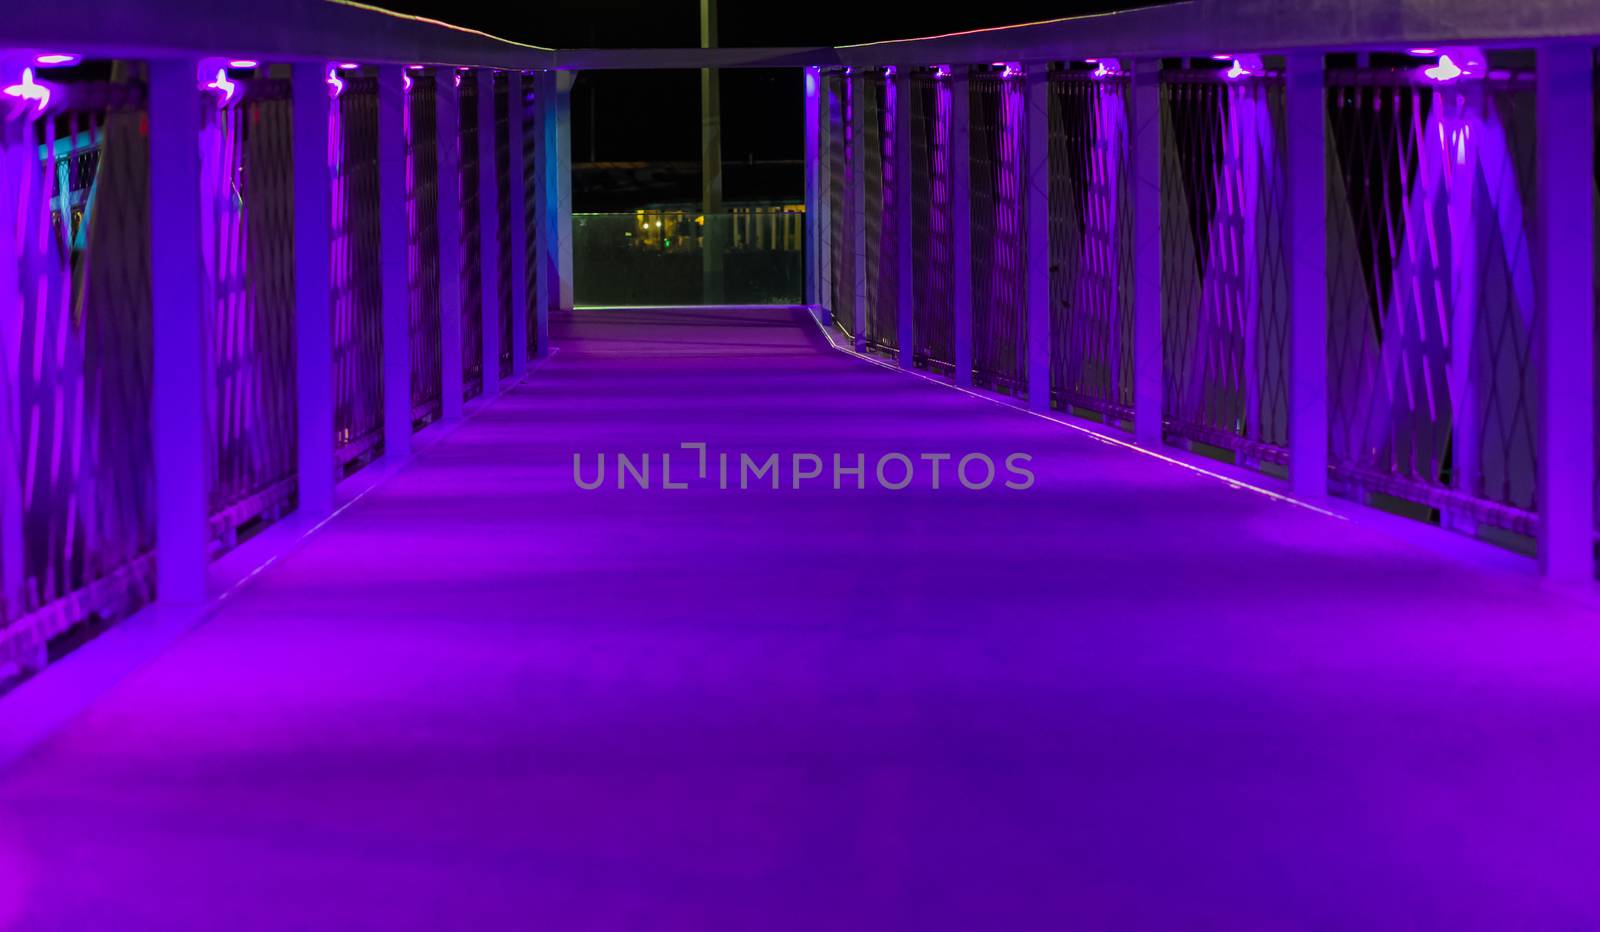 neon purple lighted bridge walking road modern architecture in scheveningen a popular city in the netherlands by charlottebleijenberg